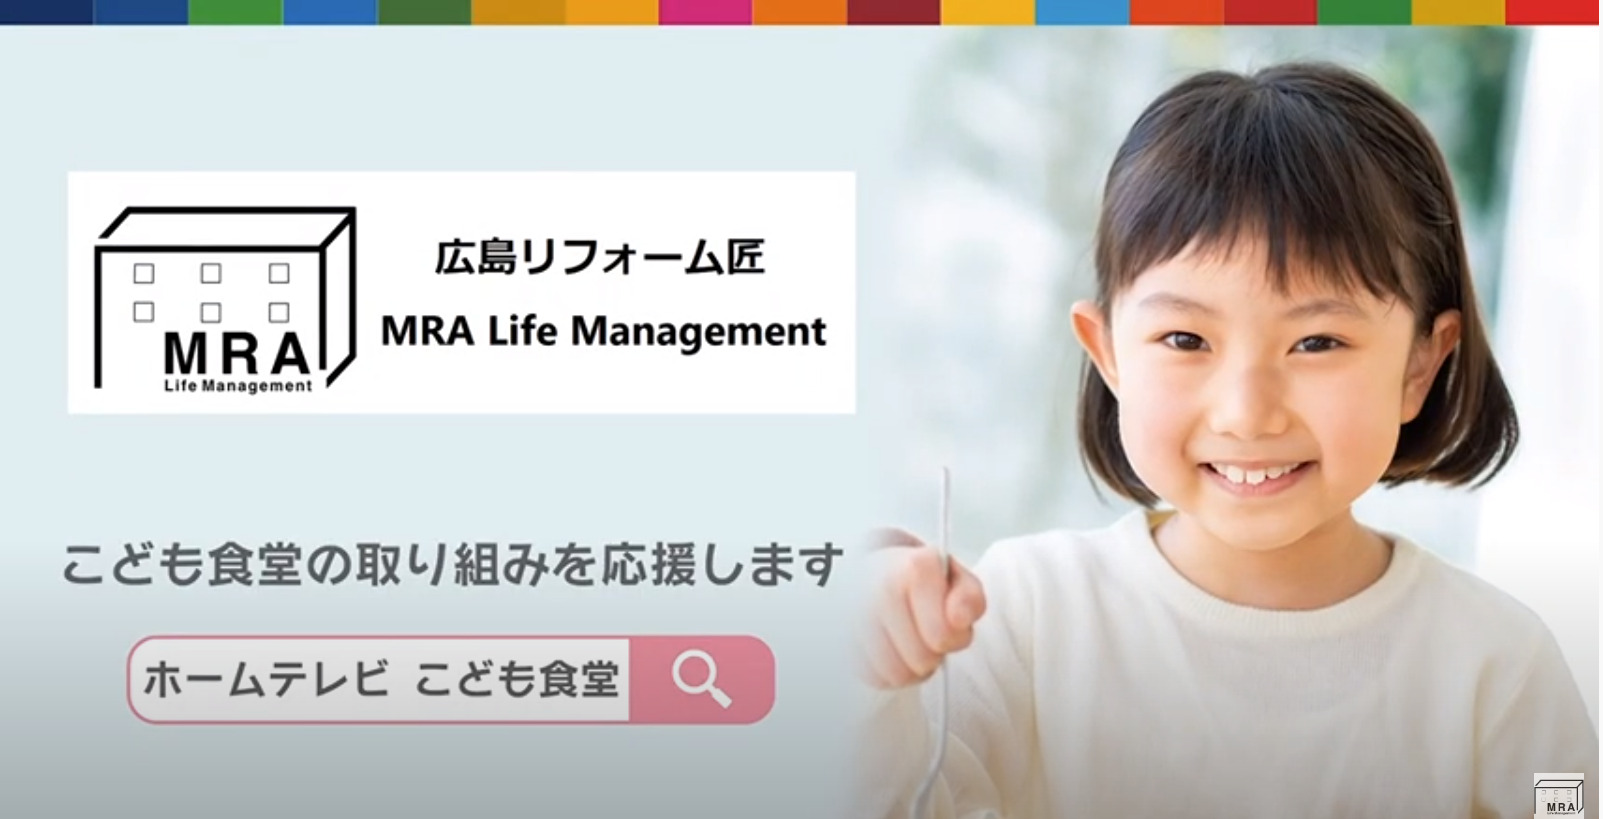 【SDGs】MRA Life Management